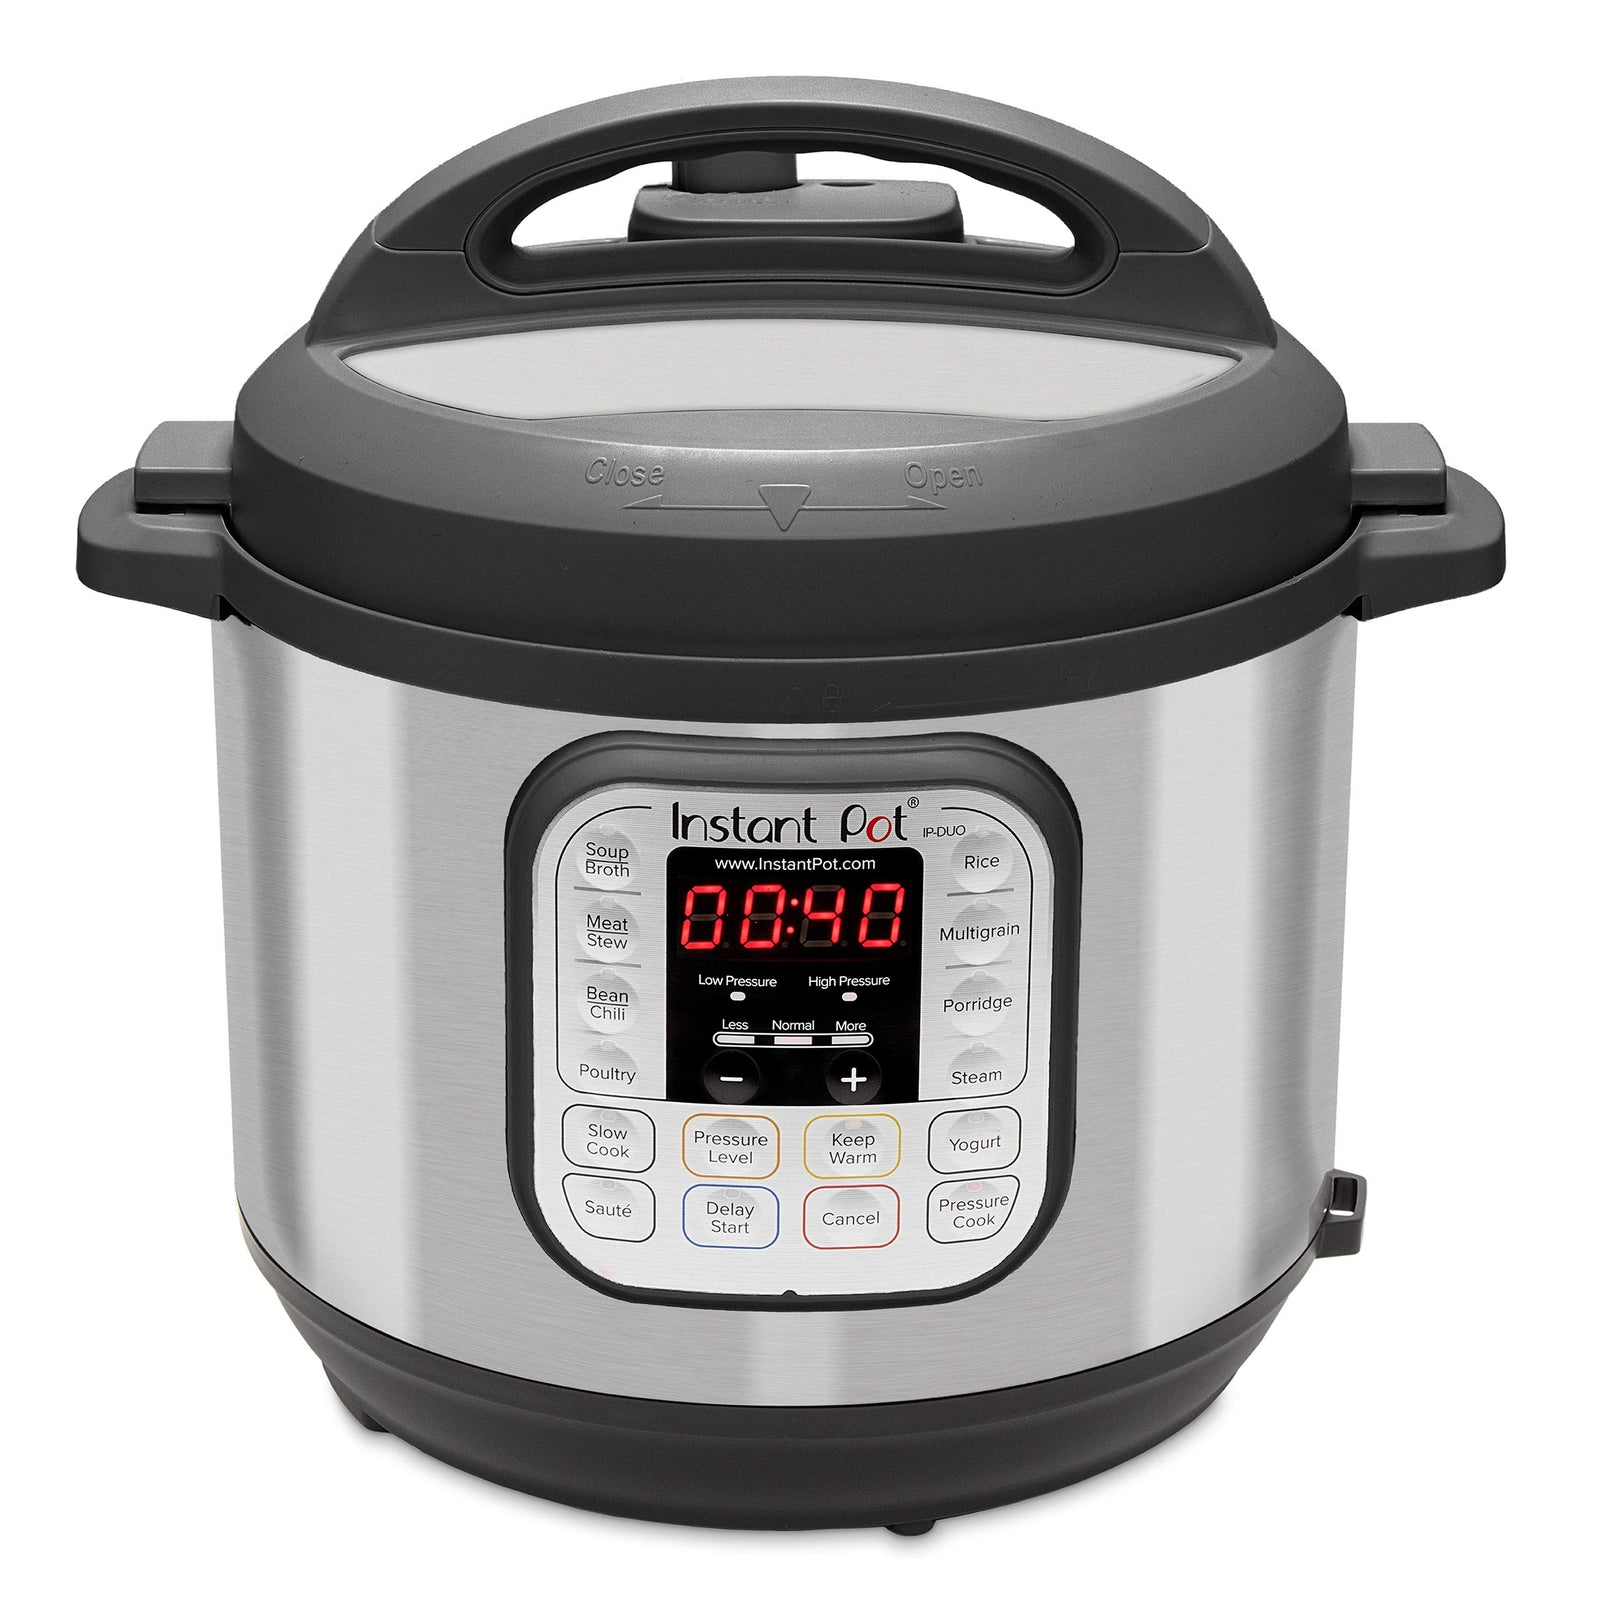 Digital Pressure Cooker 8-quart with Stainless Steel Inner Pot